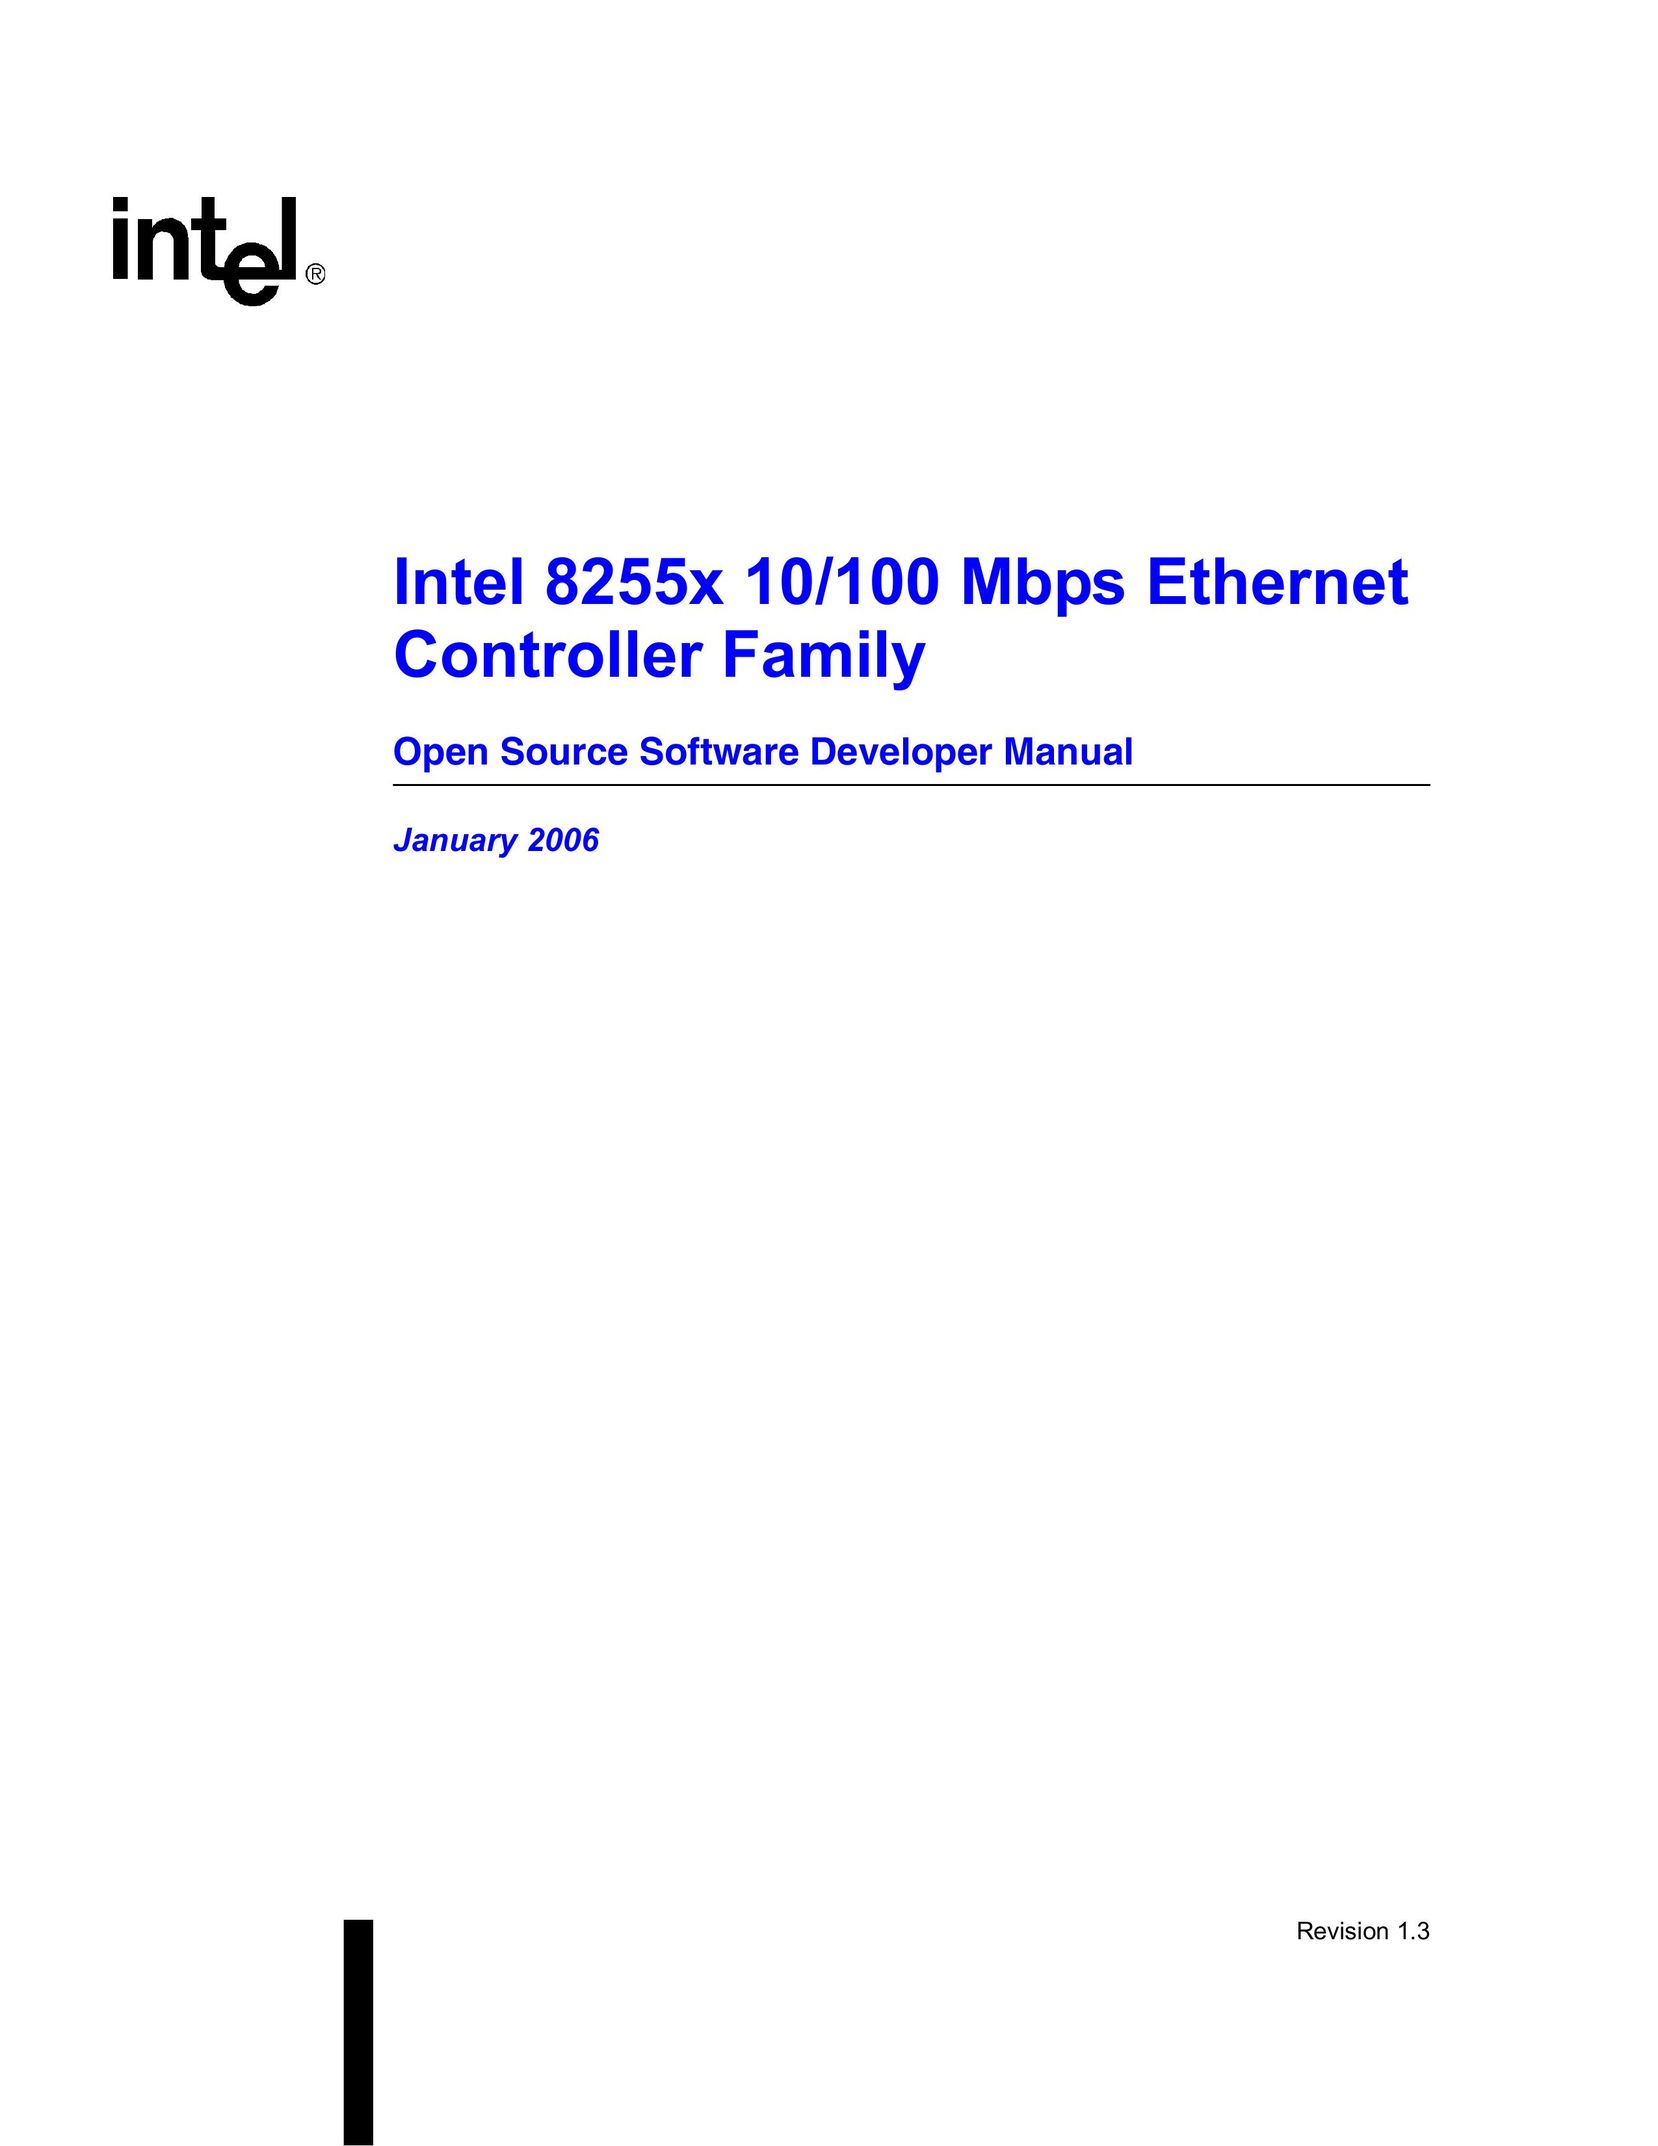 Intel 82550 Switch User Manual